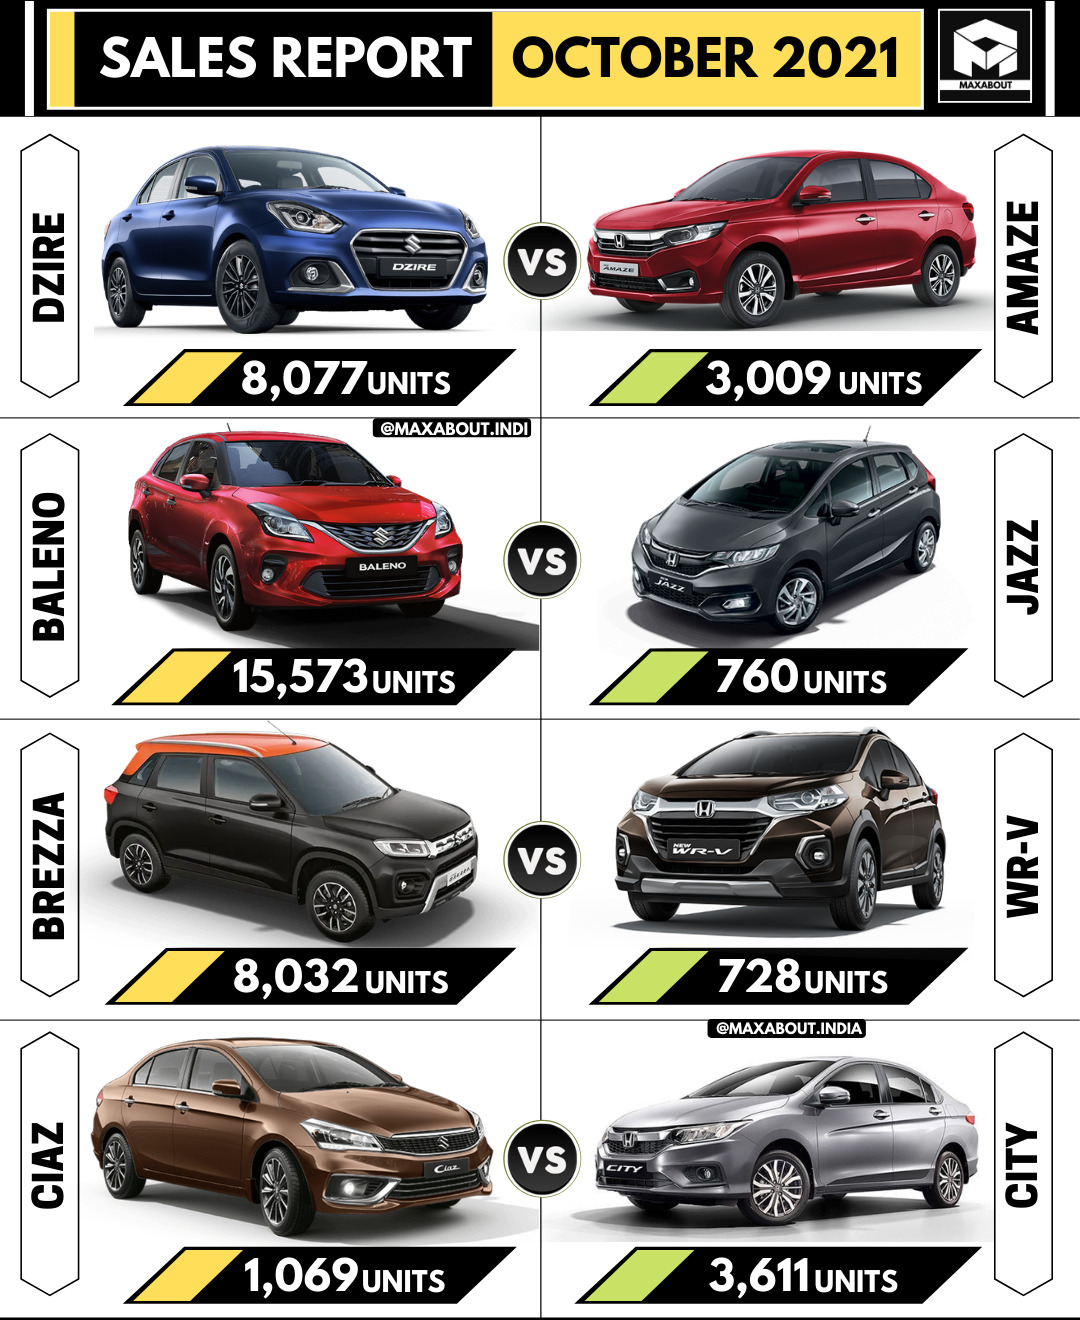 Sales Report: Maruti Cars vs Honda Cars (October 2021)